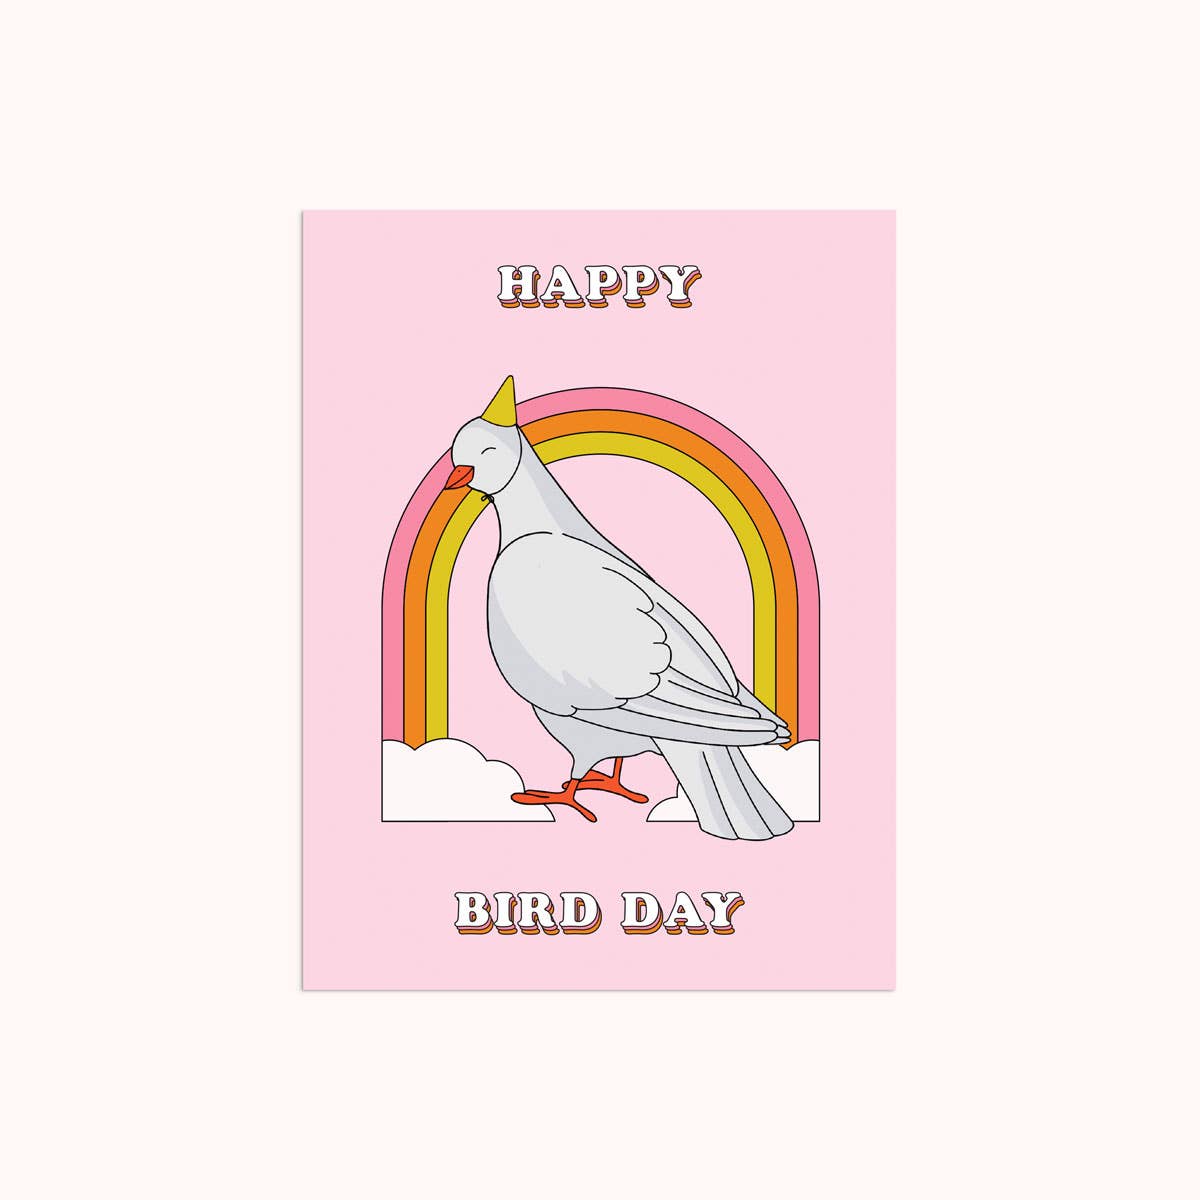 Happy Bird Day